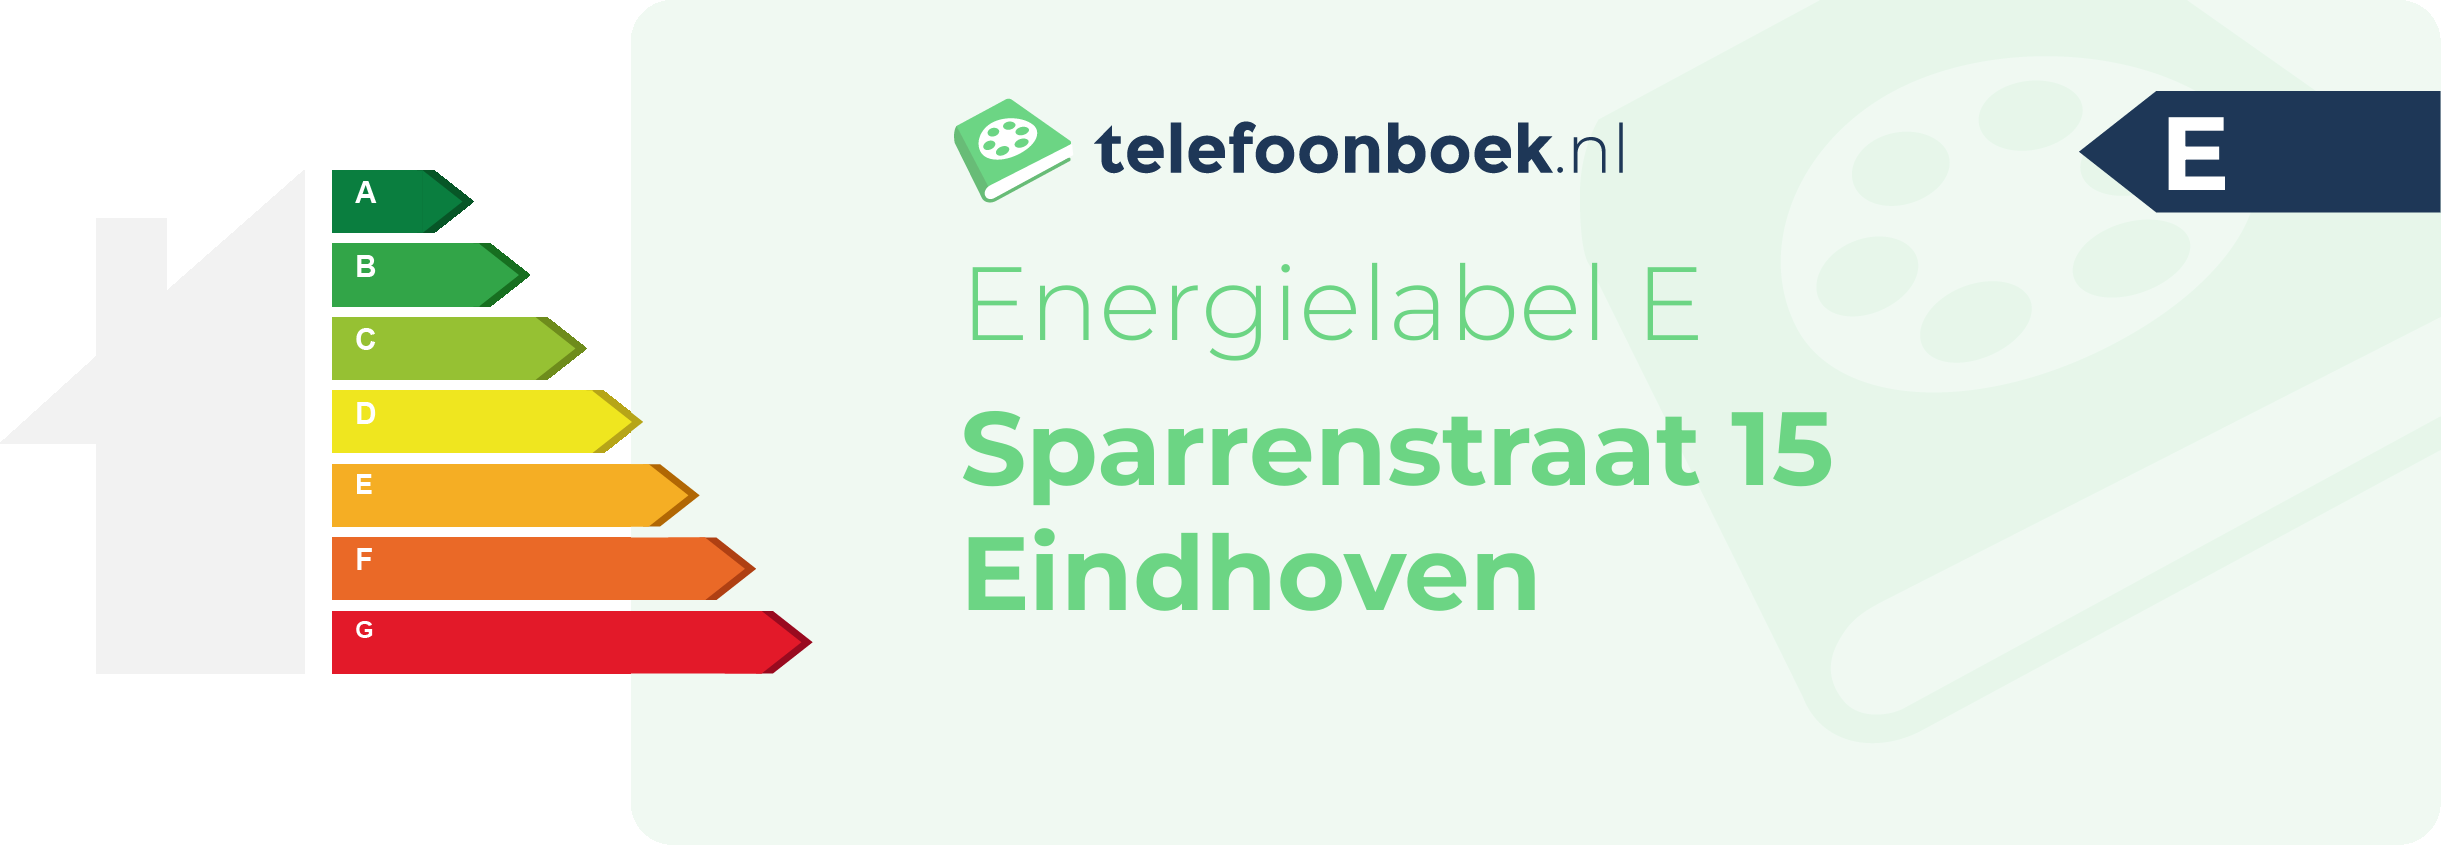 Energielabel Sparrenstraat 15 Eindhoven